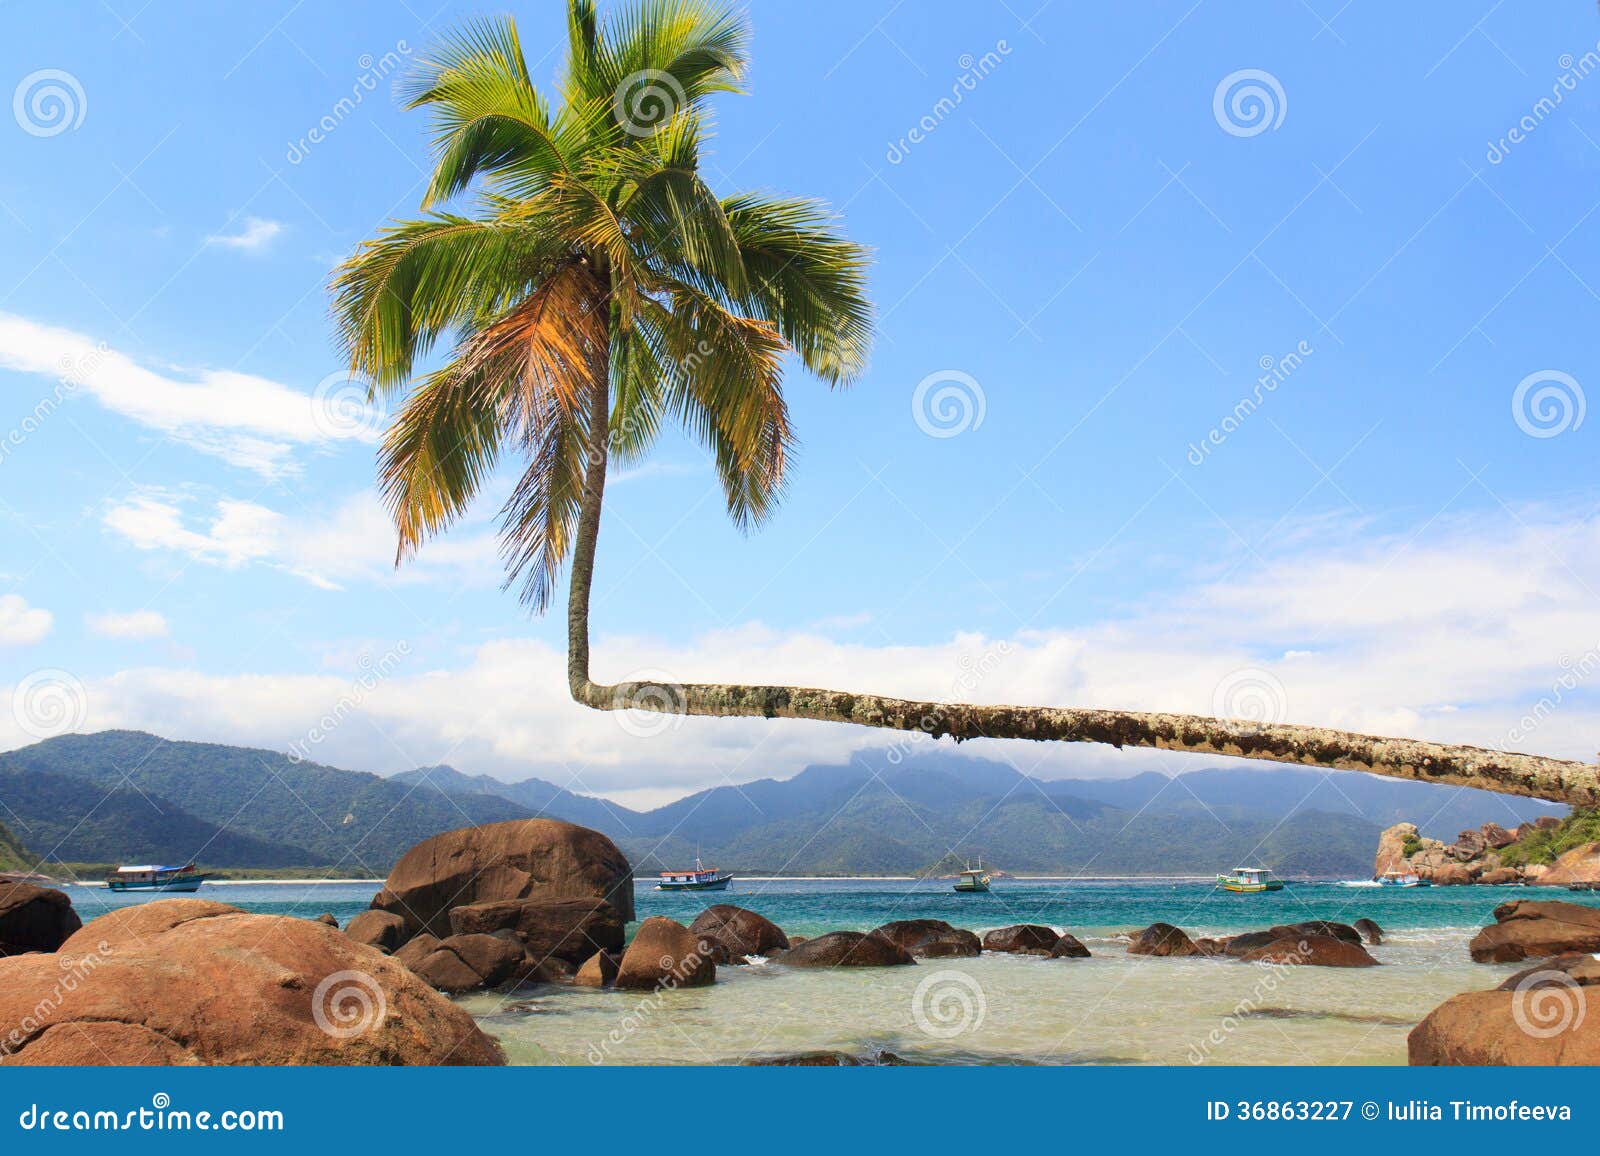 palm tree on beach aventueiro, ilha grande, brazil